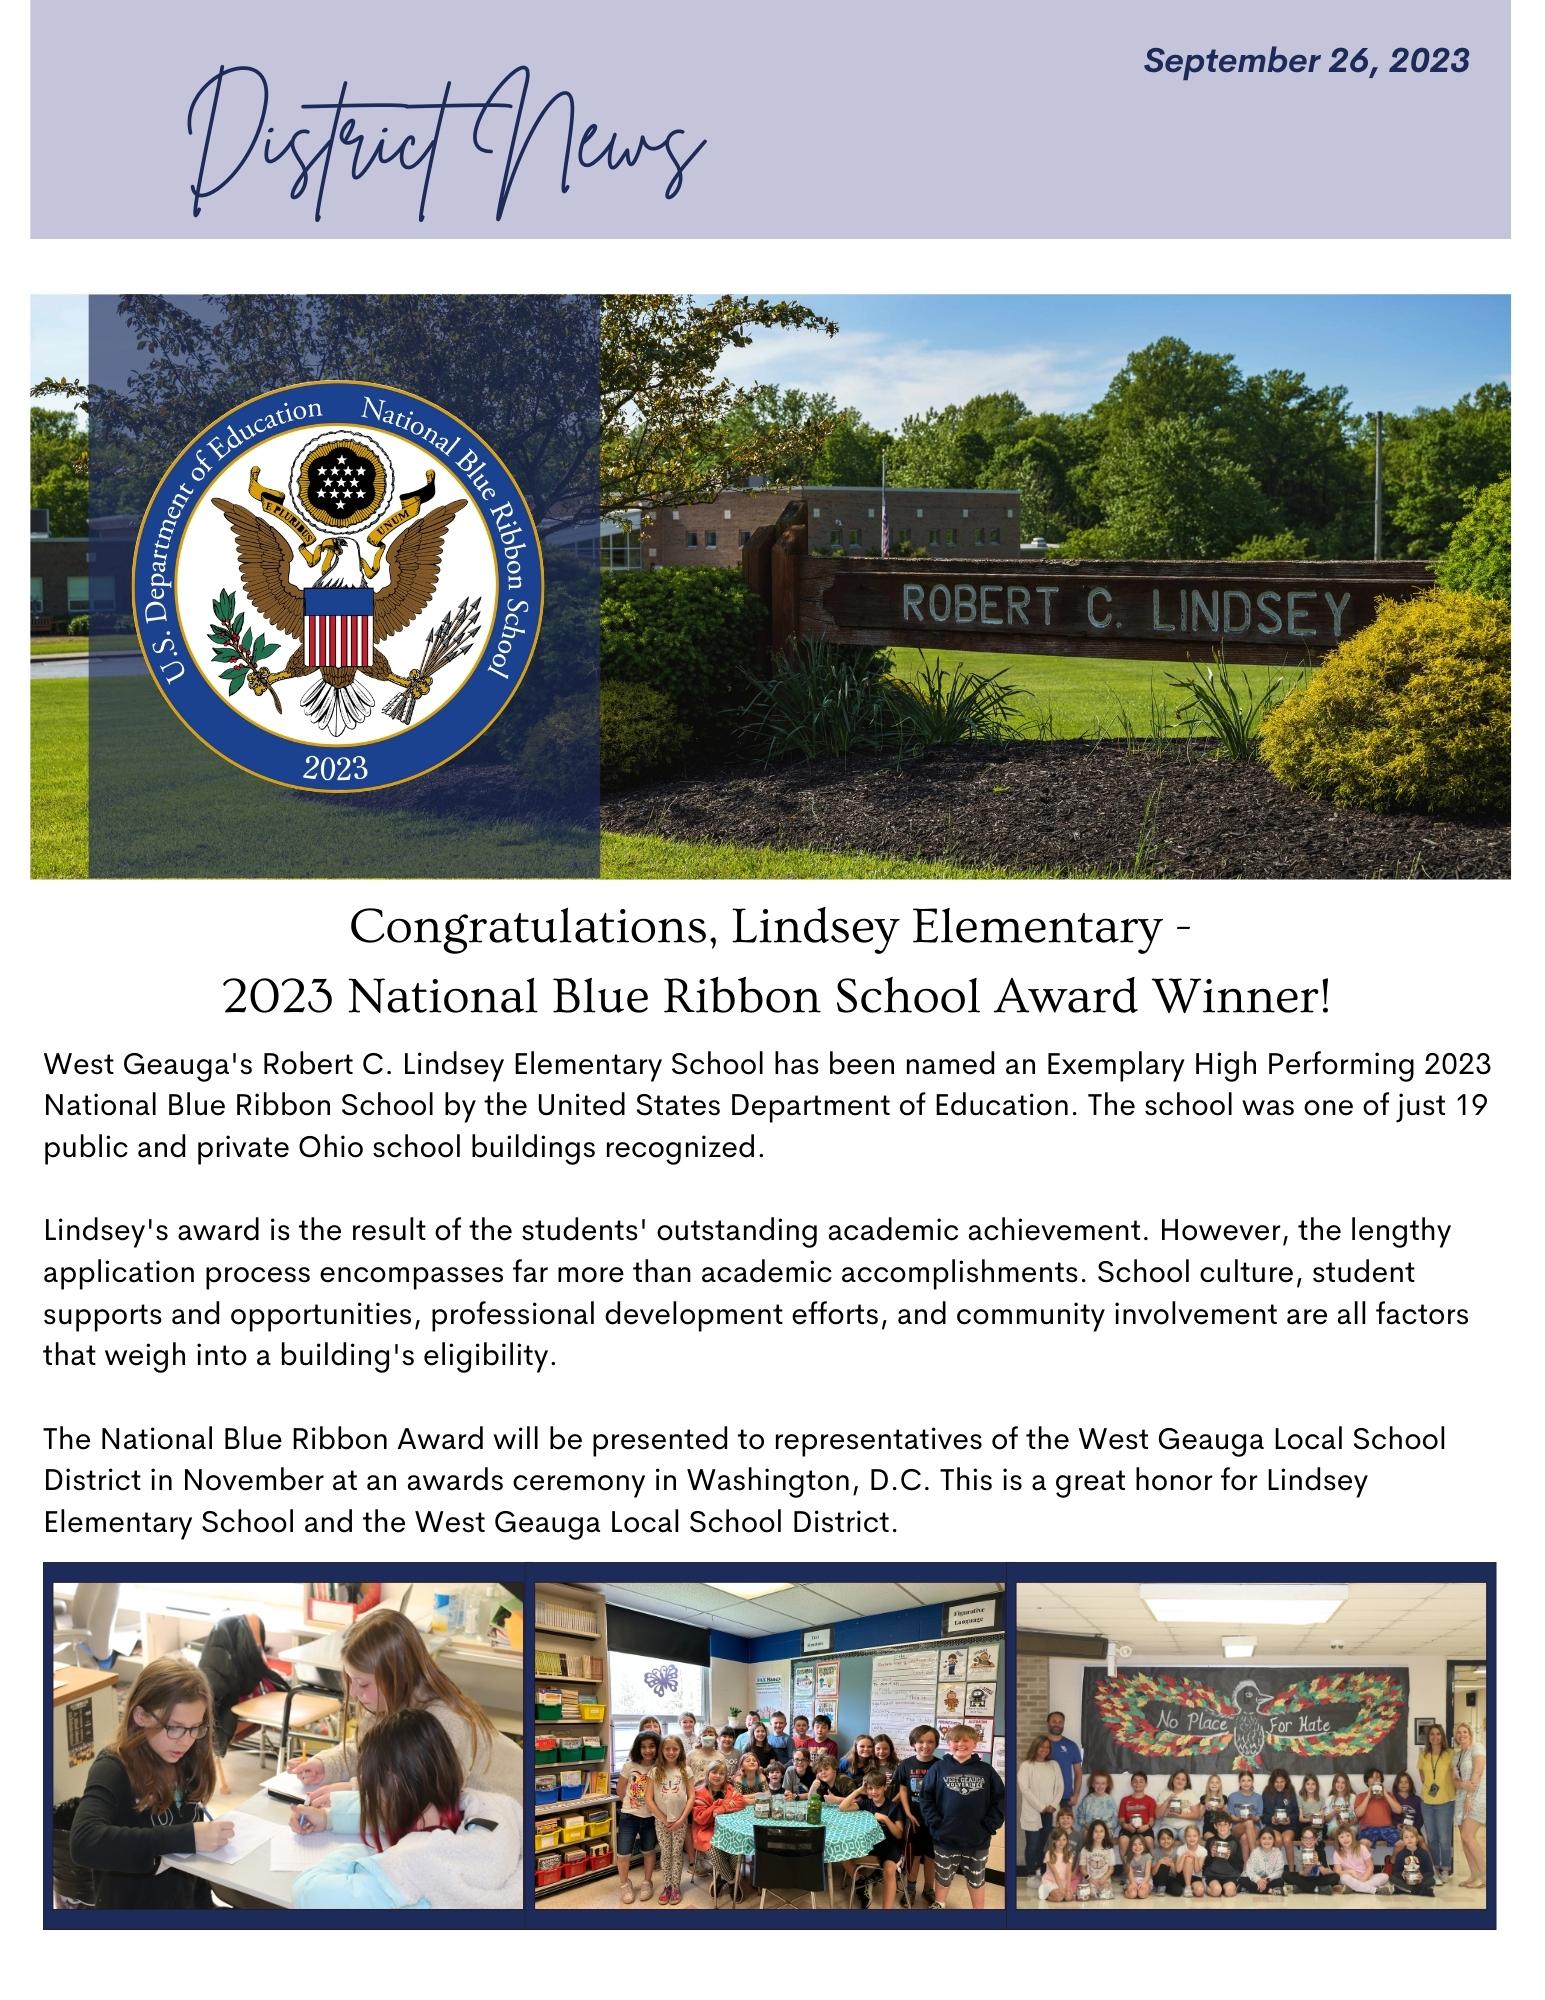 Congratulations Lindsey Elementary 2023 National Blue Ribbon School Award Winner